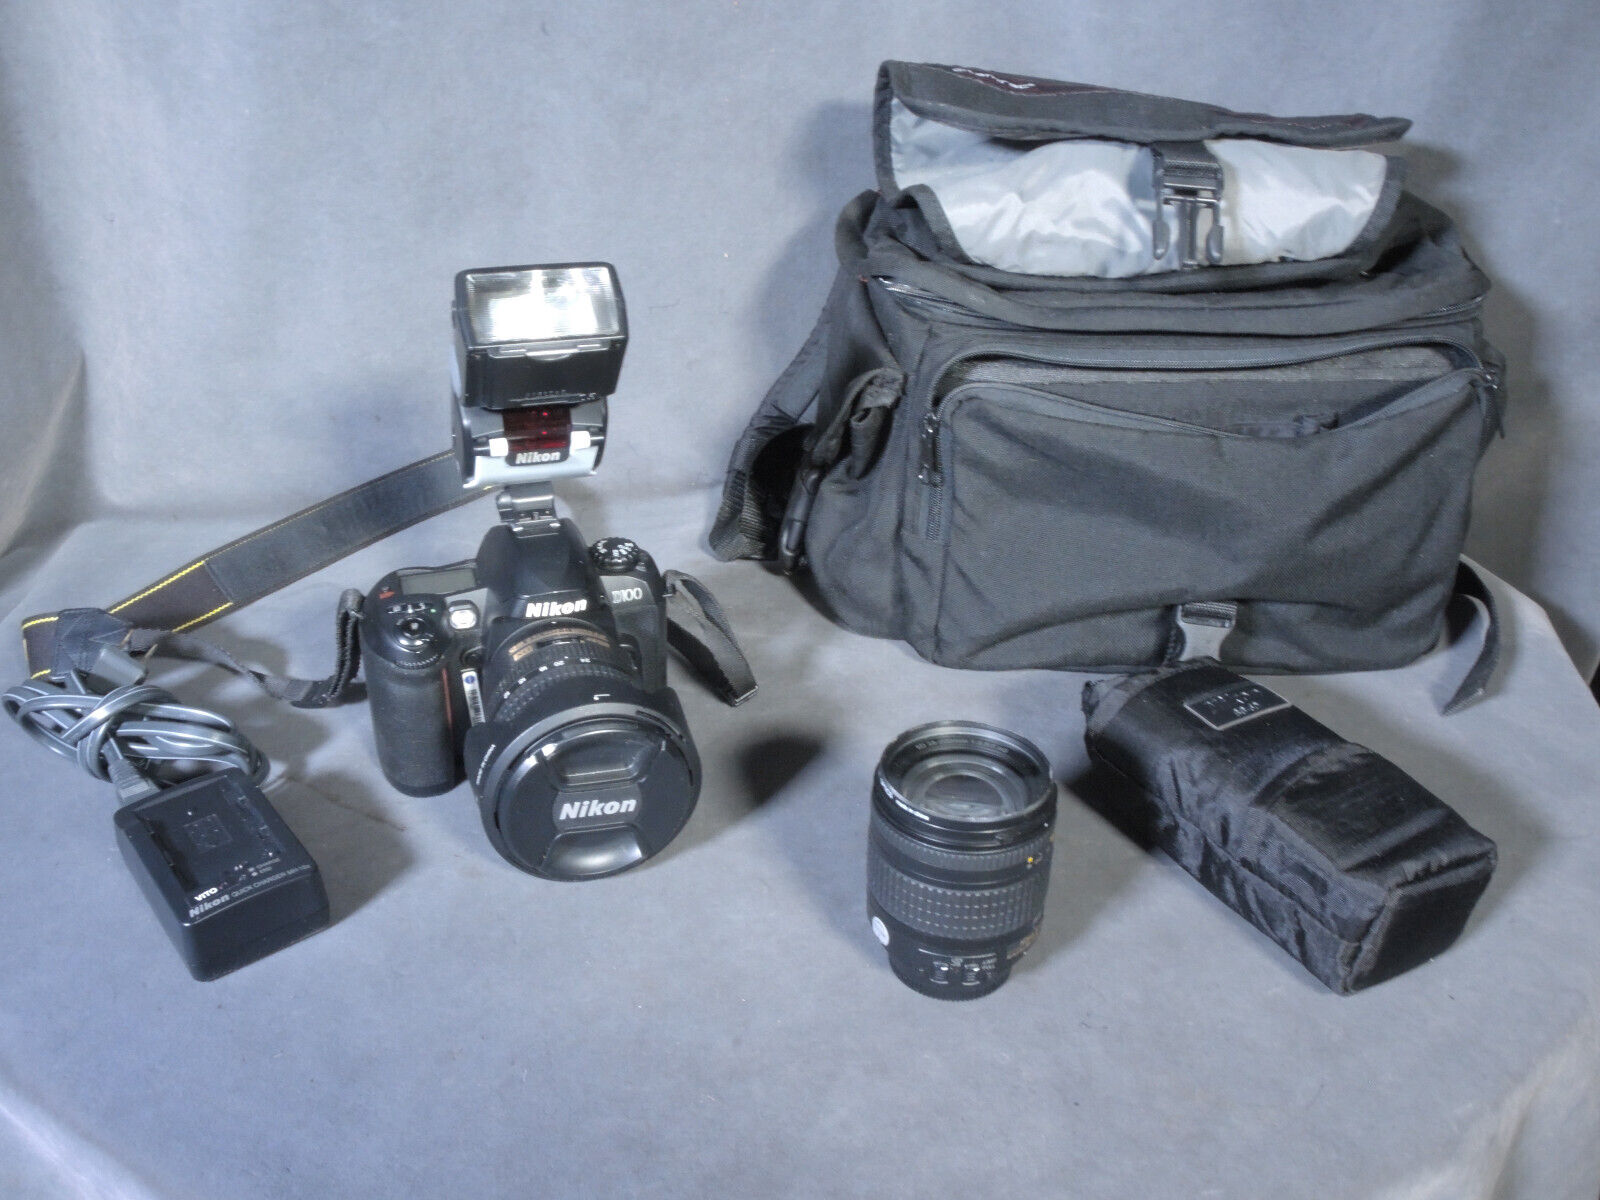 Nasa Owned Nikon D100 Digital SLR Camera, 2 Lenses, Flash & Tamrac Back Pack Bag